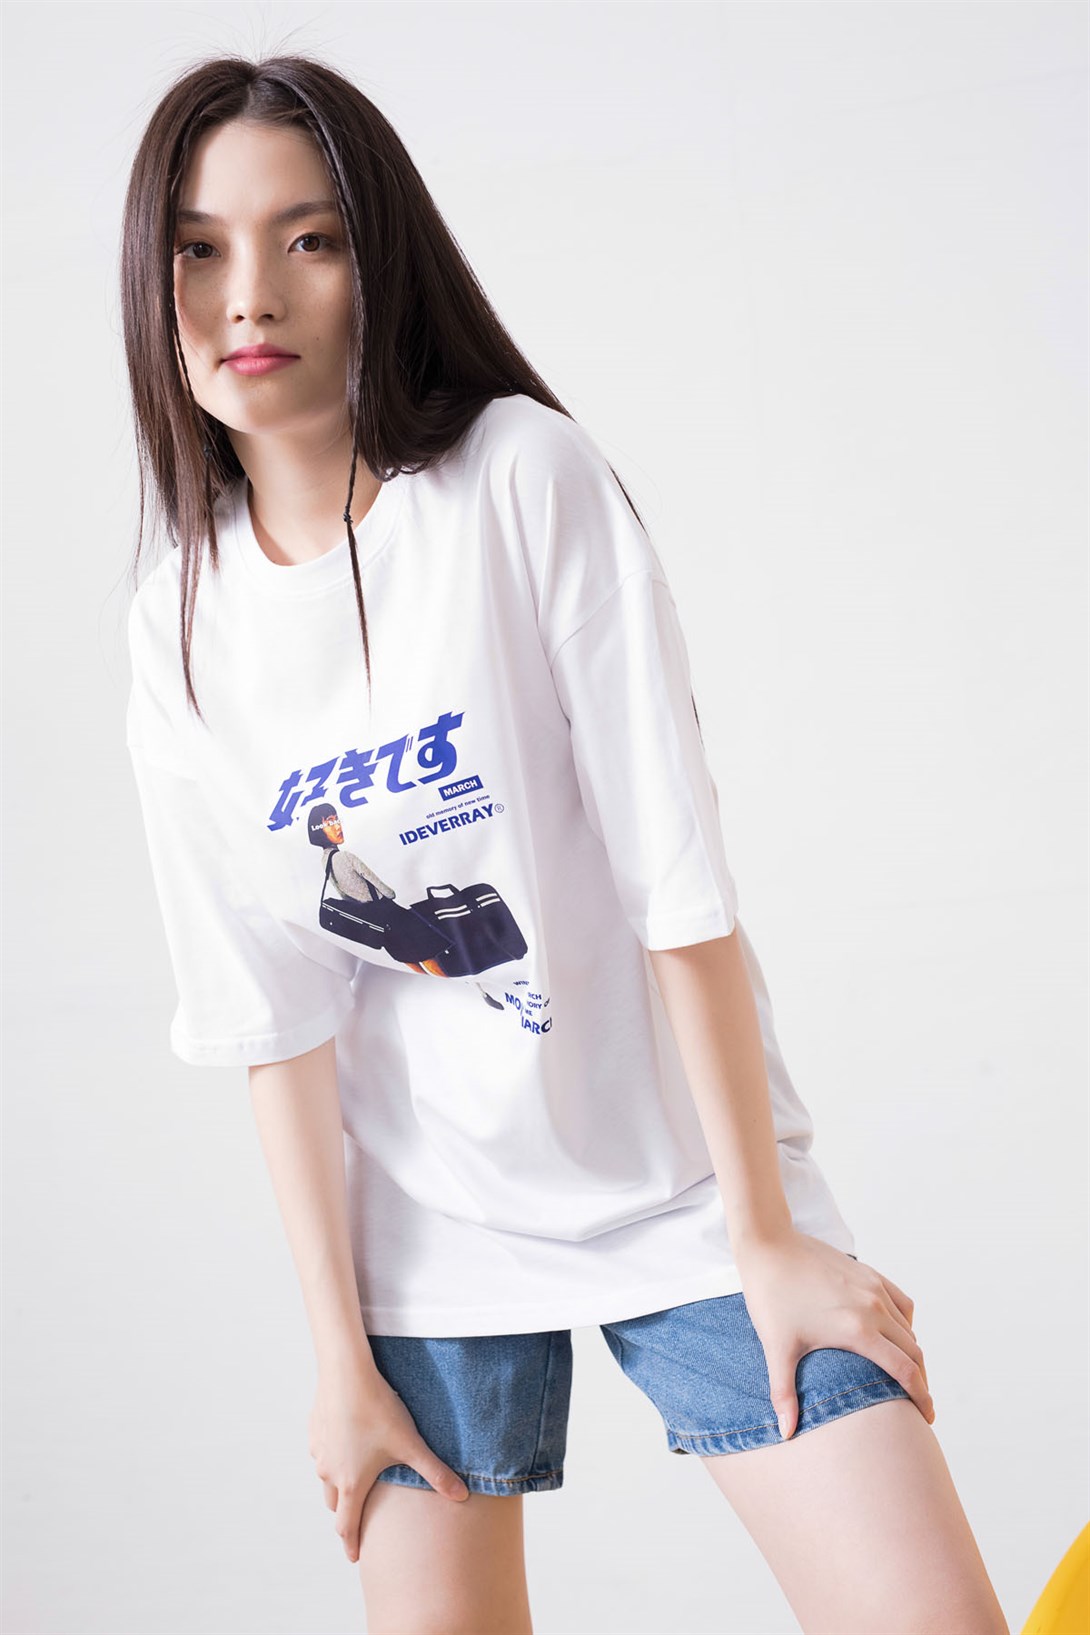 Trendiz Unisex Harajuku Girl Beyaz Tshirt